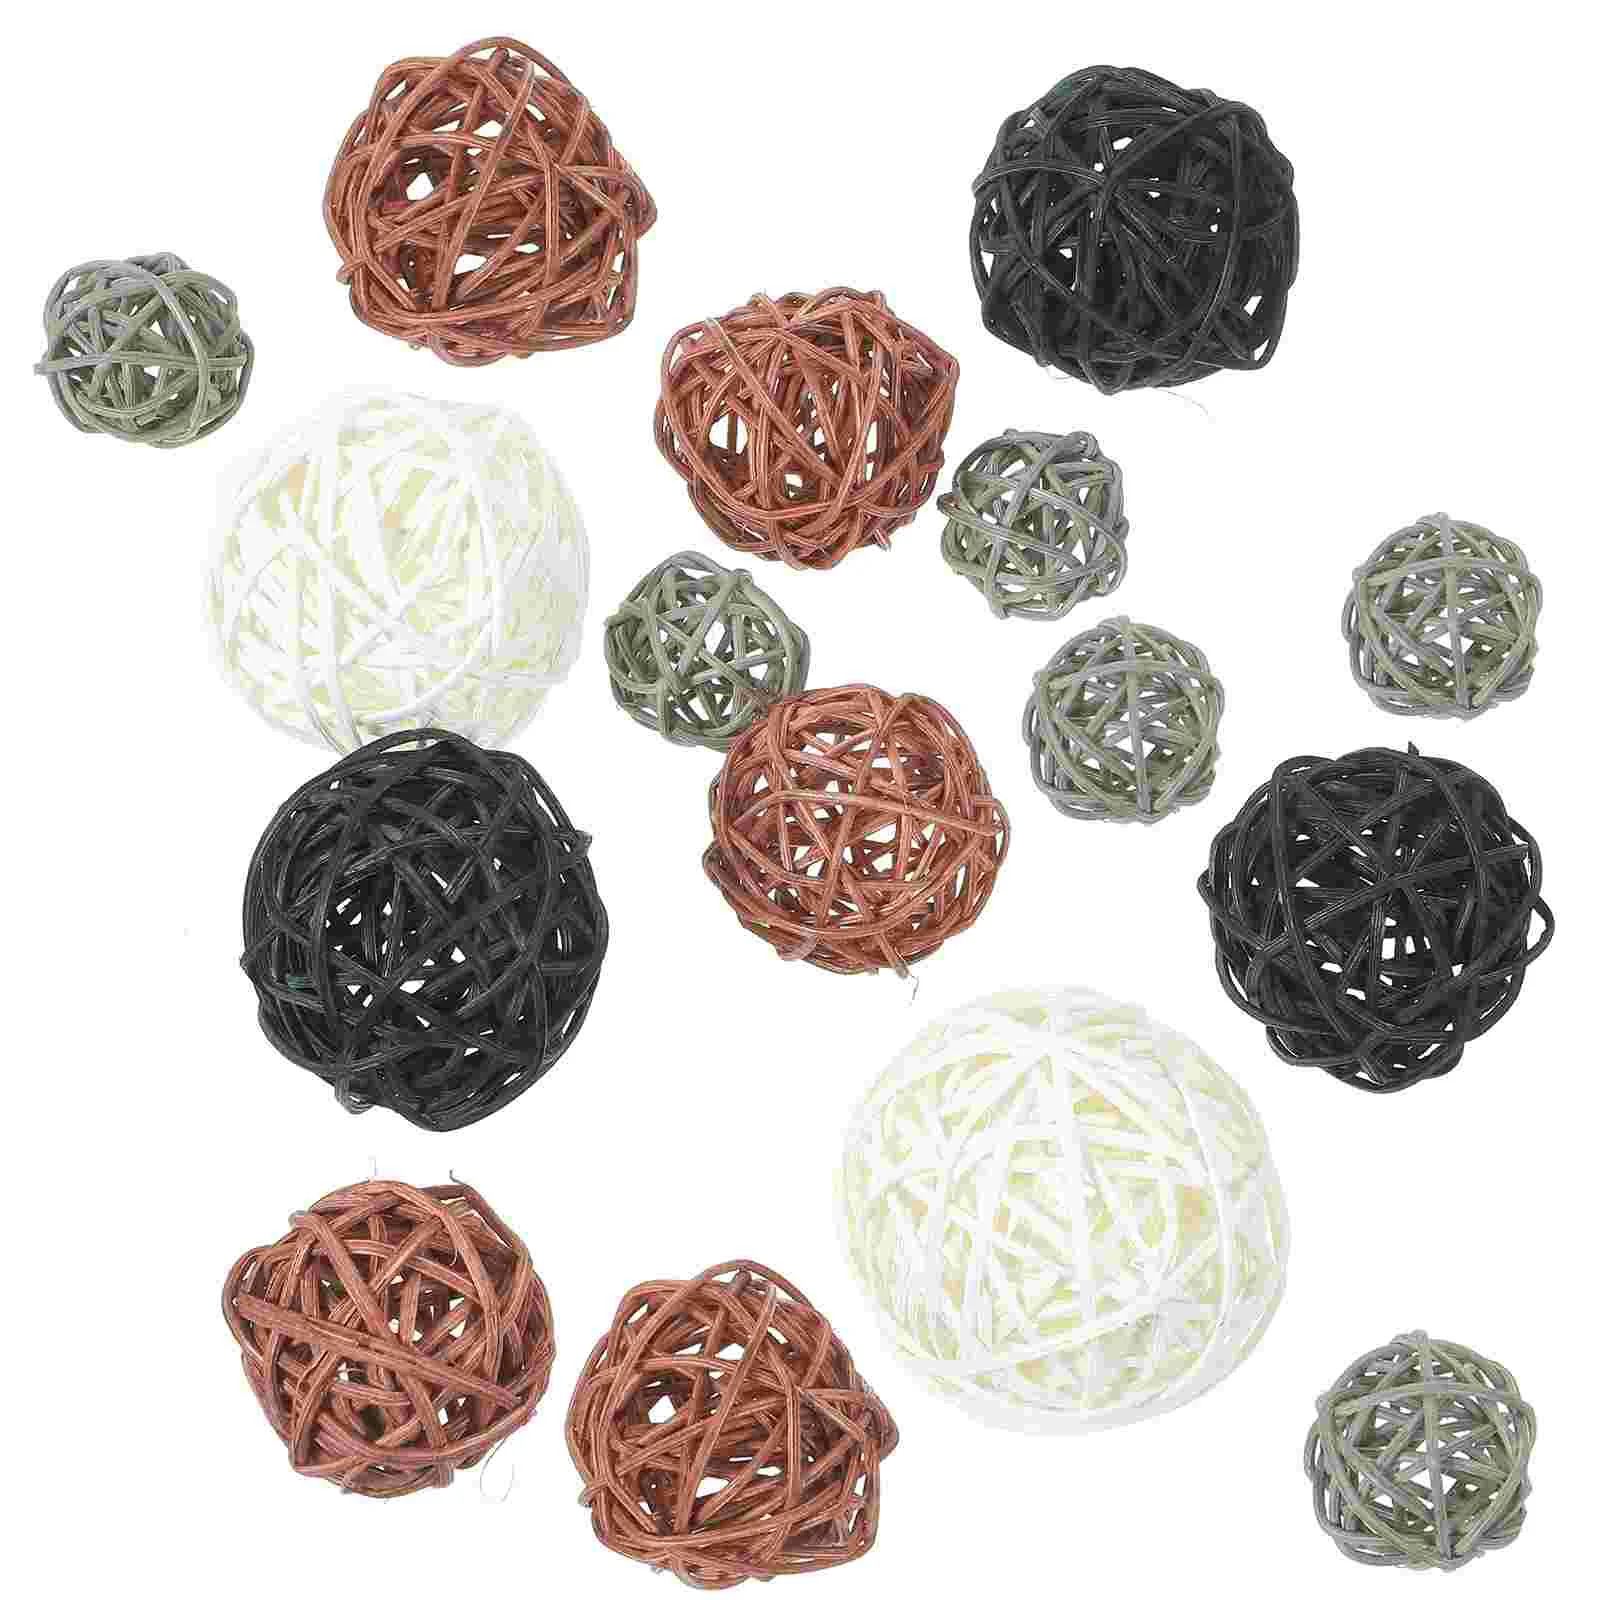 

36pcs Party Rattan Balls Vase Fillers Wicker Rattan Balls Decorative Weaving Rattan Balls